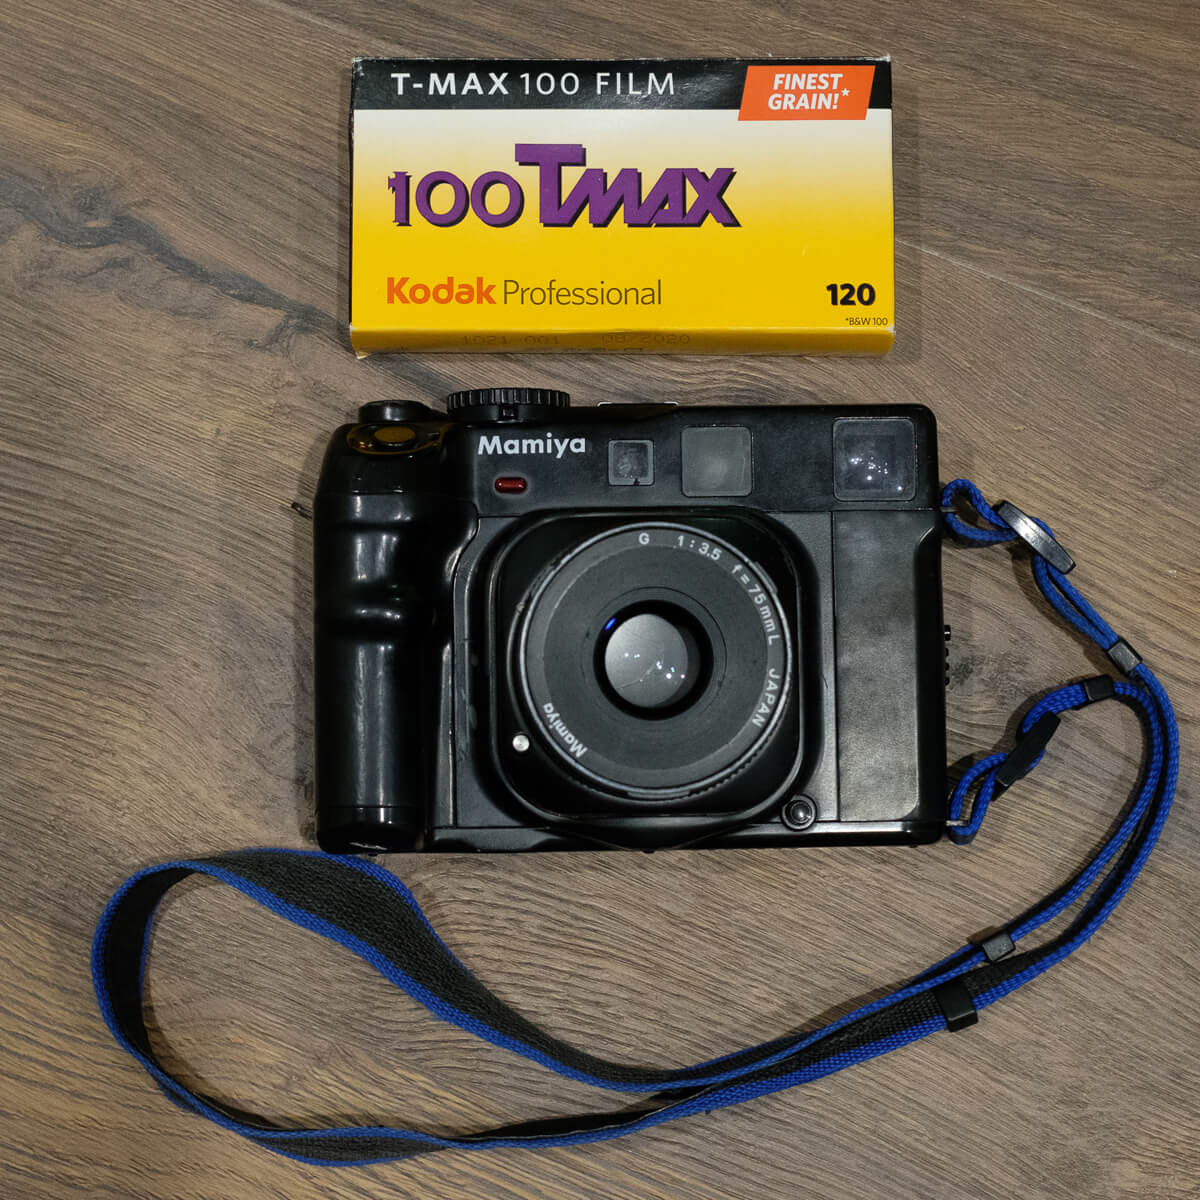 Kodak T-MAX 100, my Mamiya with it's Mamiya 75mm : f3.5 lens - Brendan Norris